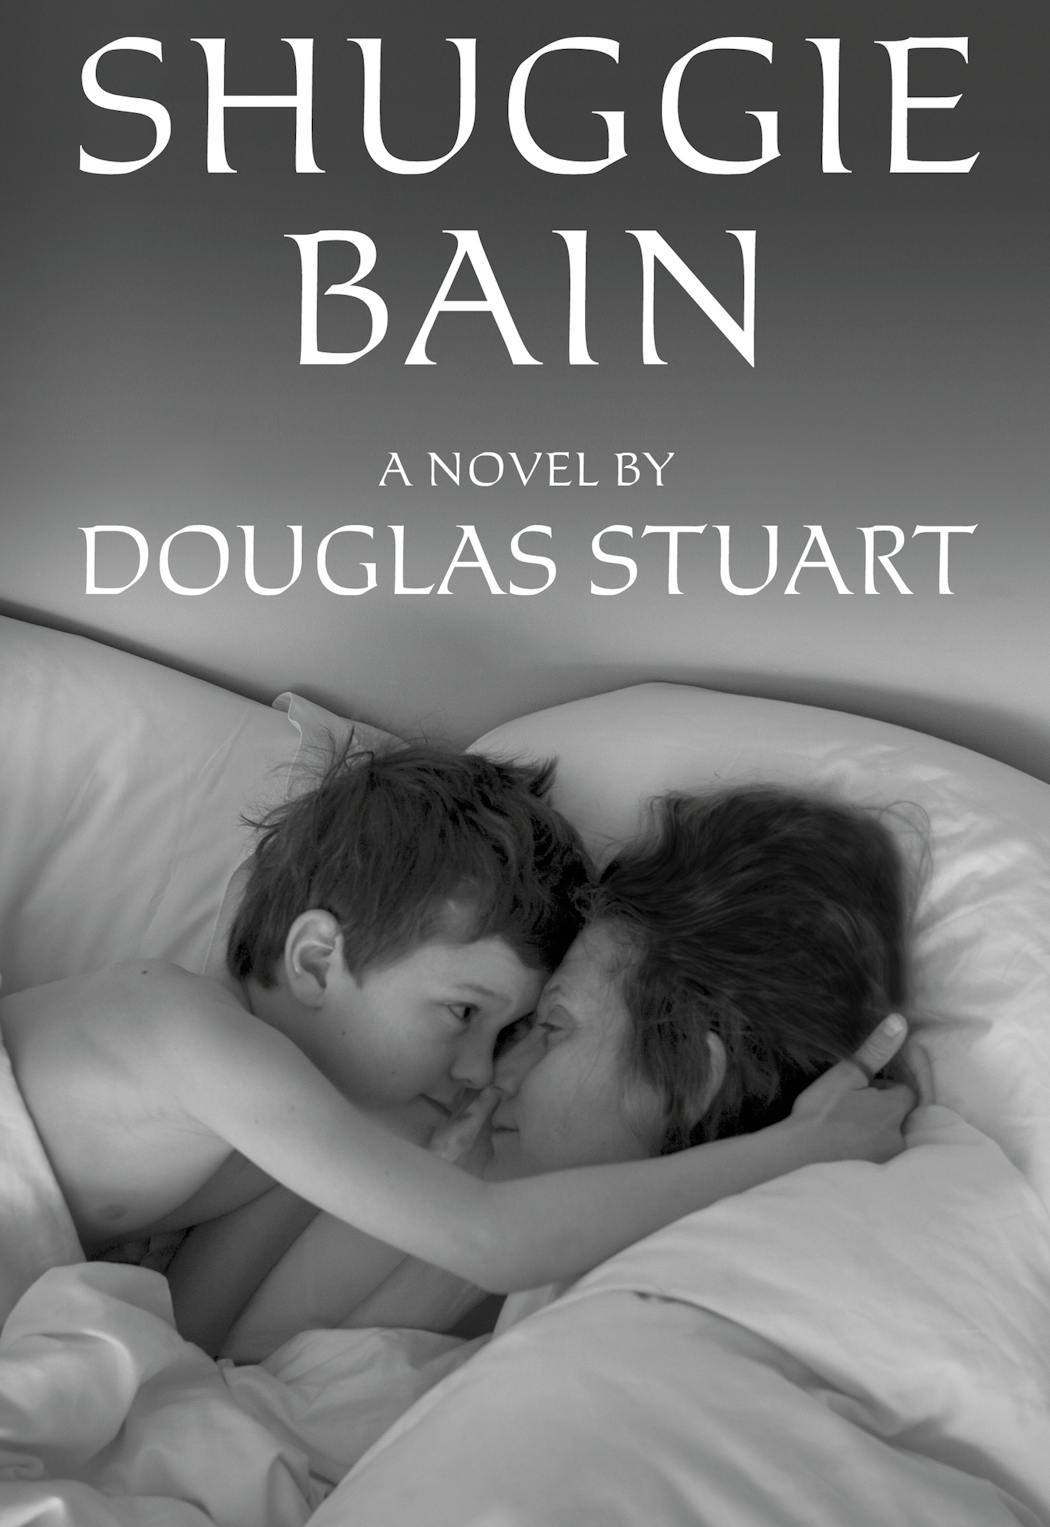 “Shuggie Bain,” a novel by Douglas Stuart.